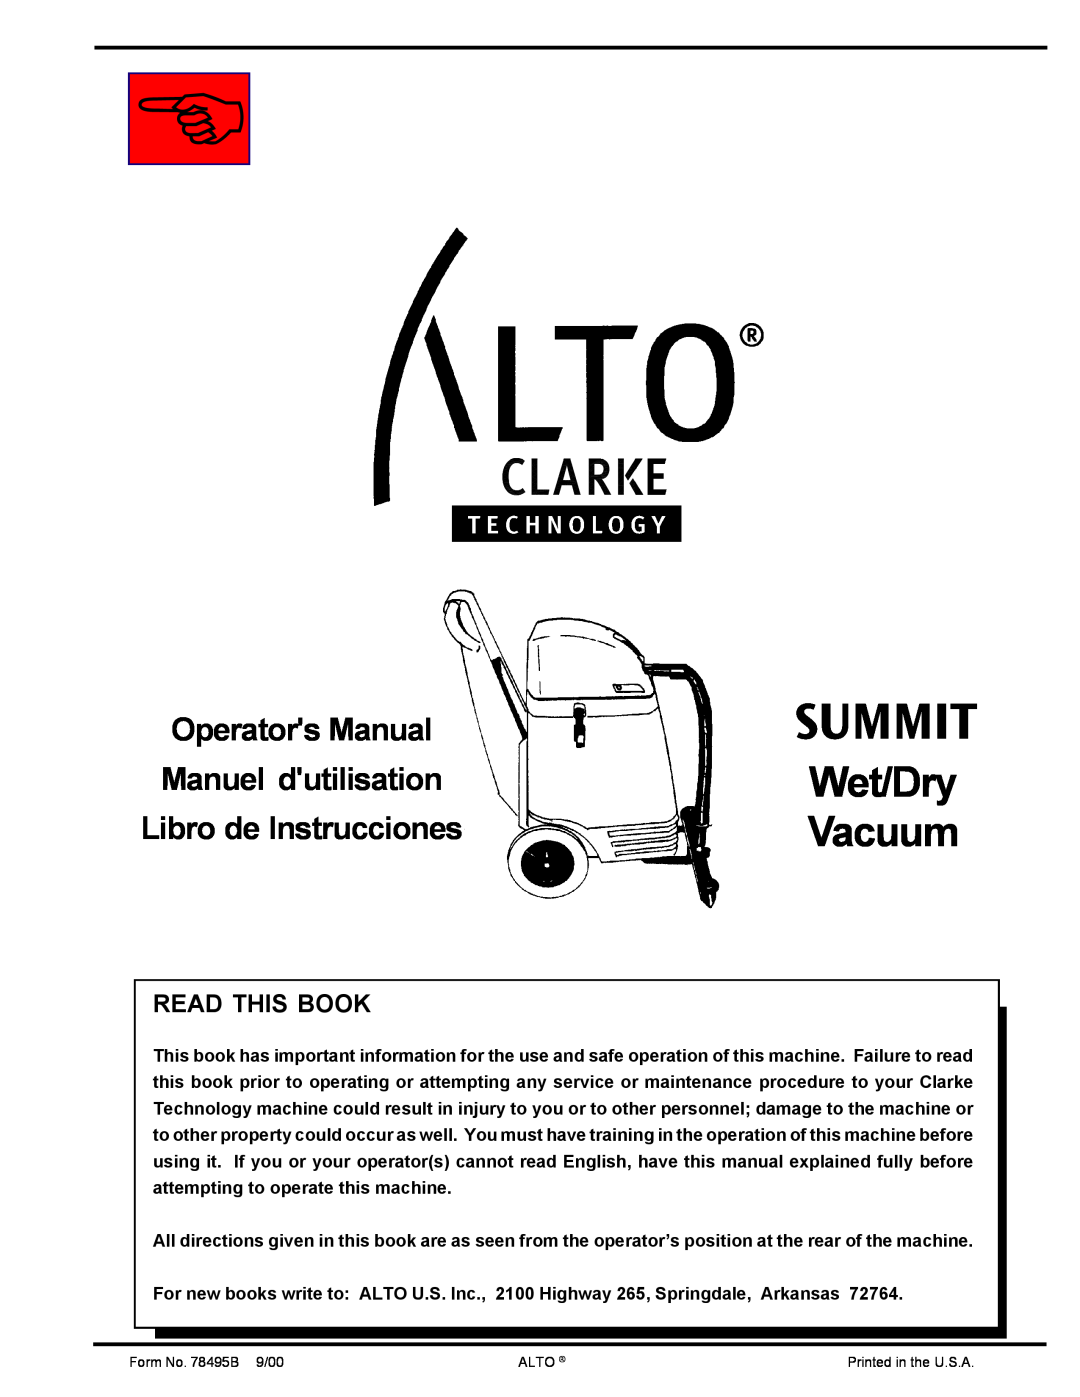 Nilfisk-ALTO Wet/Dry Vacuum manuel dutilisation Summit, Read This Book 